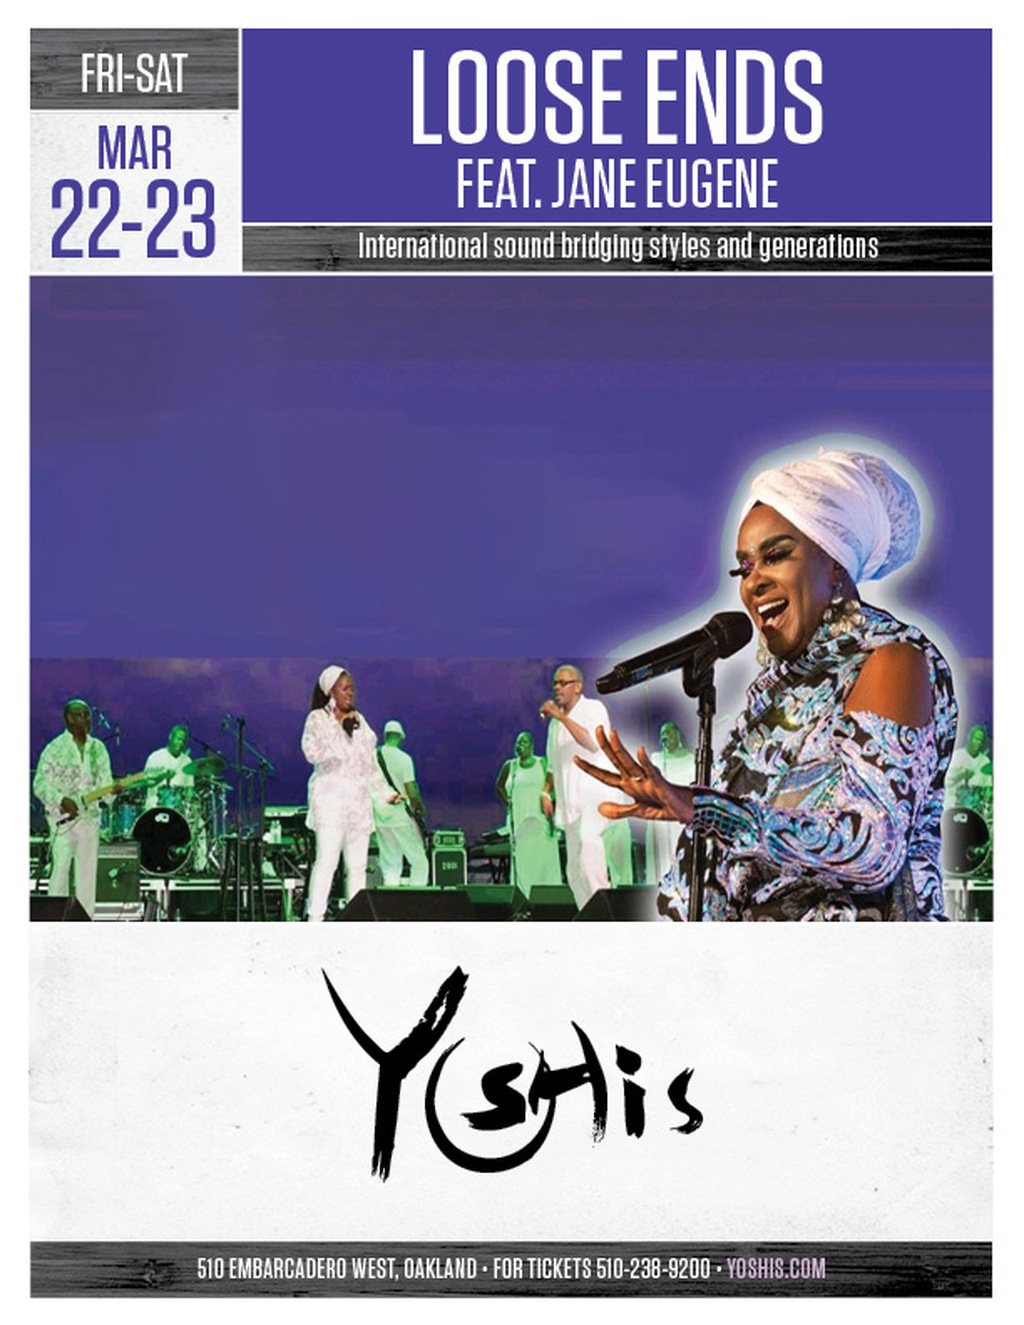 Yoshi s FRI SAI LOOSE ENDS MAR 22 23 FEAT  JANE EUGENE promotion flier on Digifli com